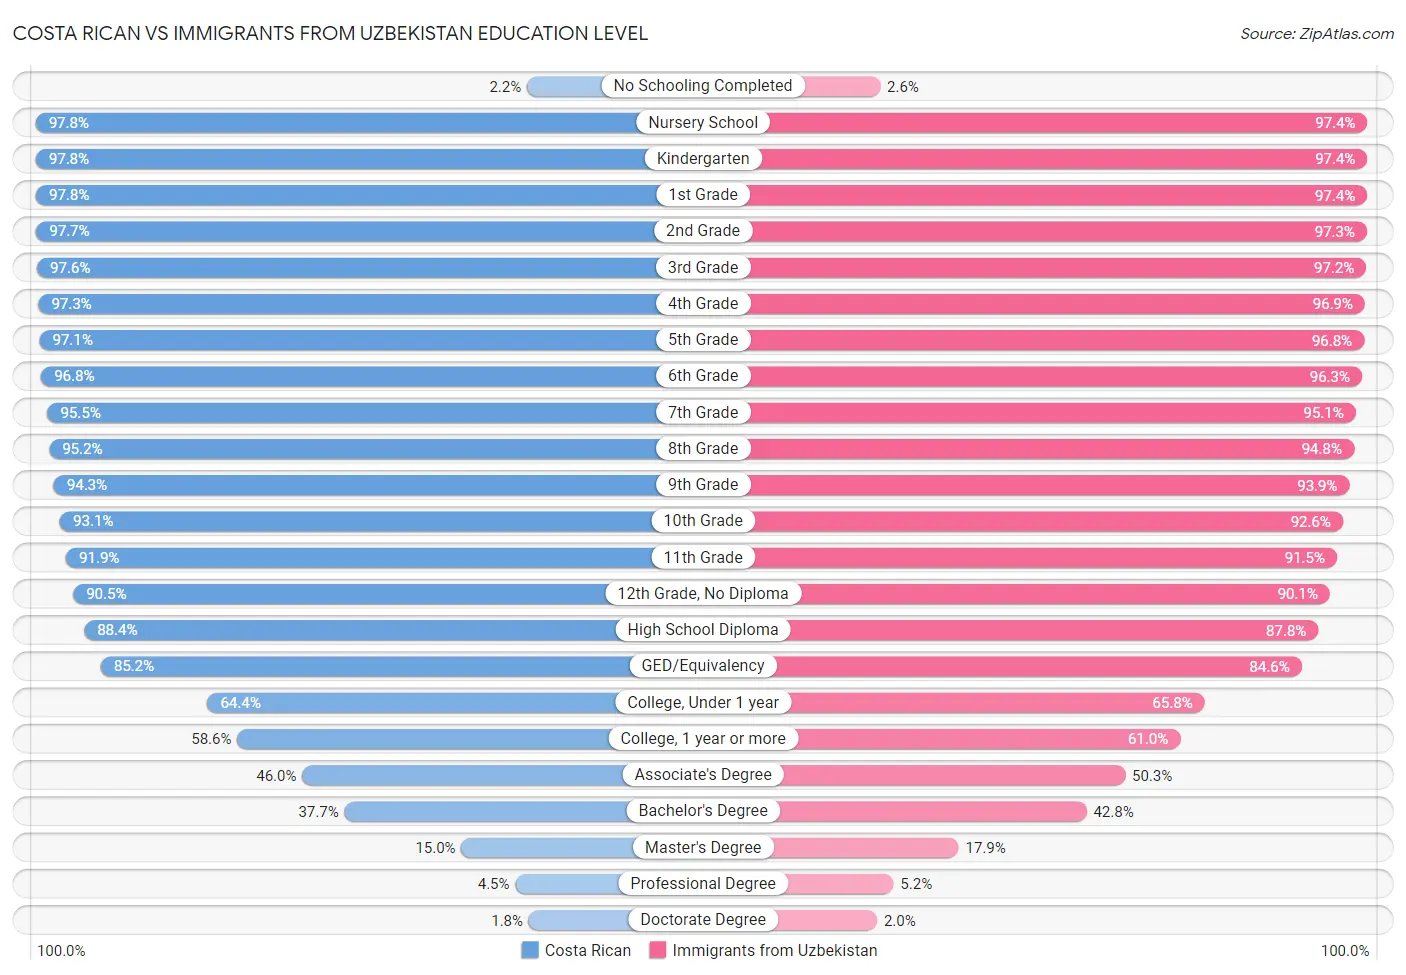 Costa Rican vs Immigrants from Uzbekistan Education Level